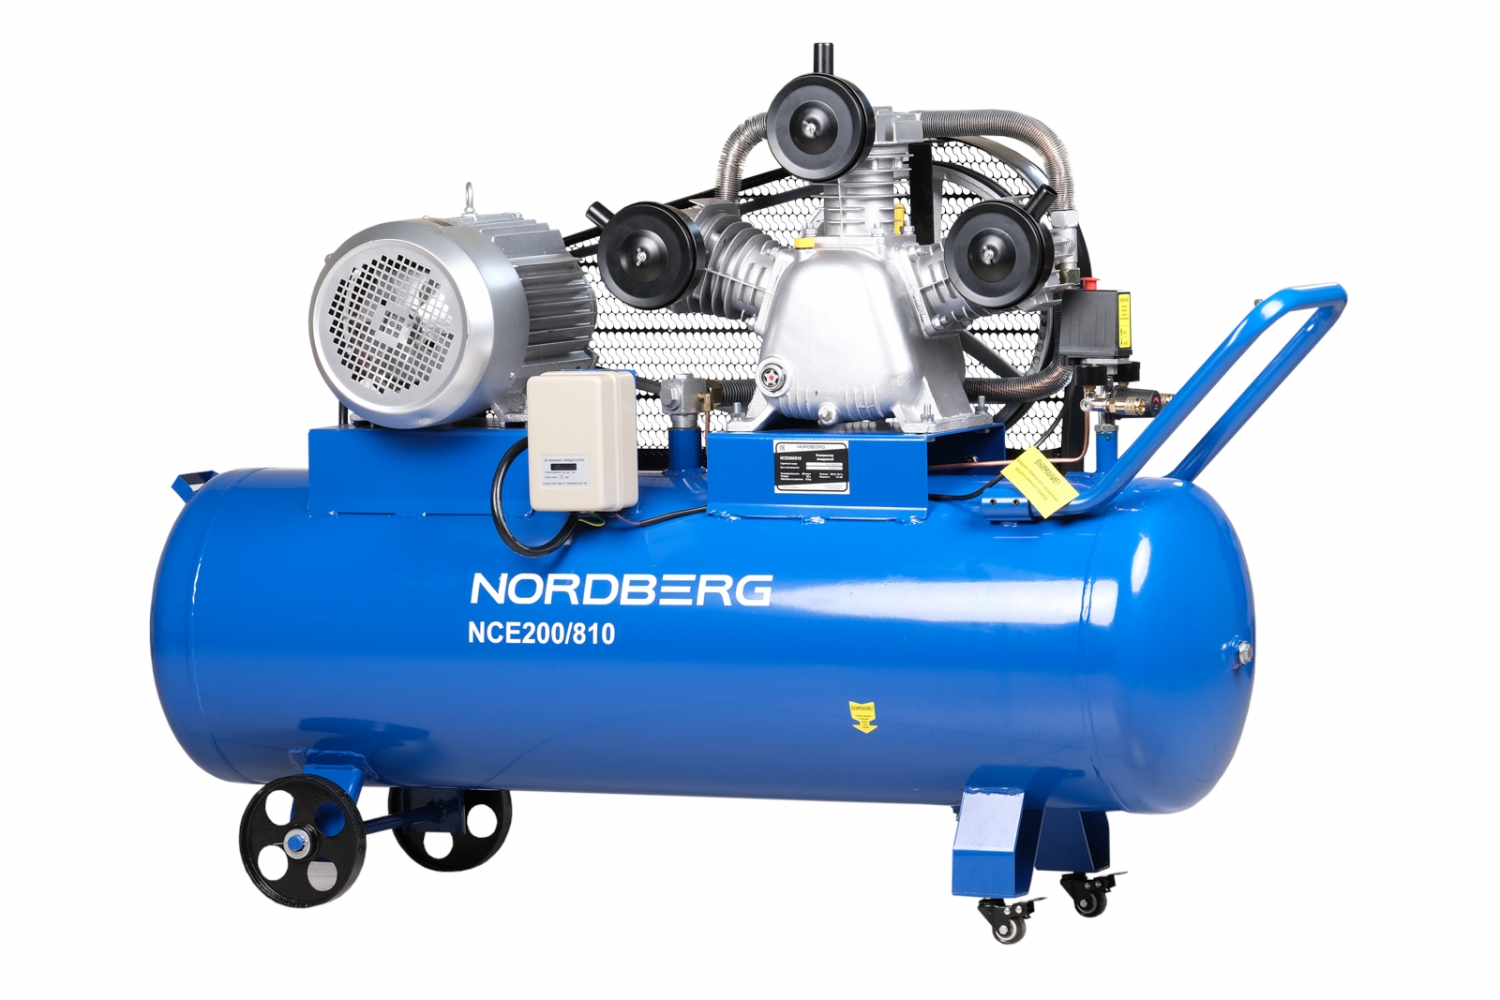 Nordberg NCE200/810